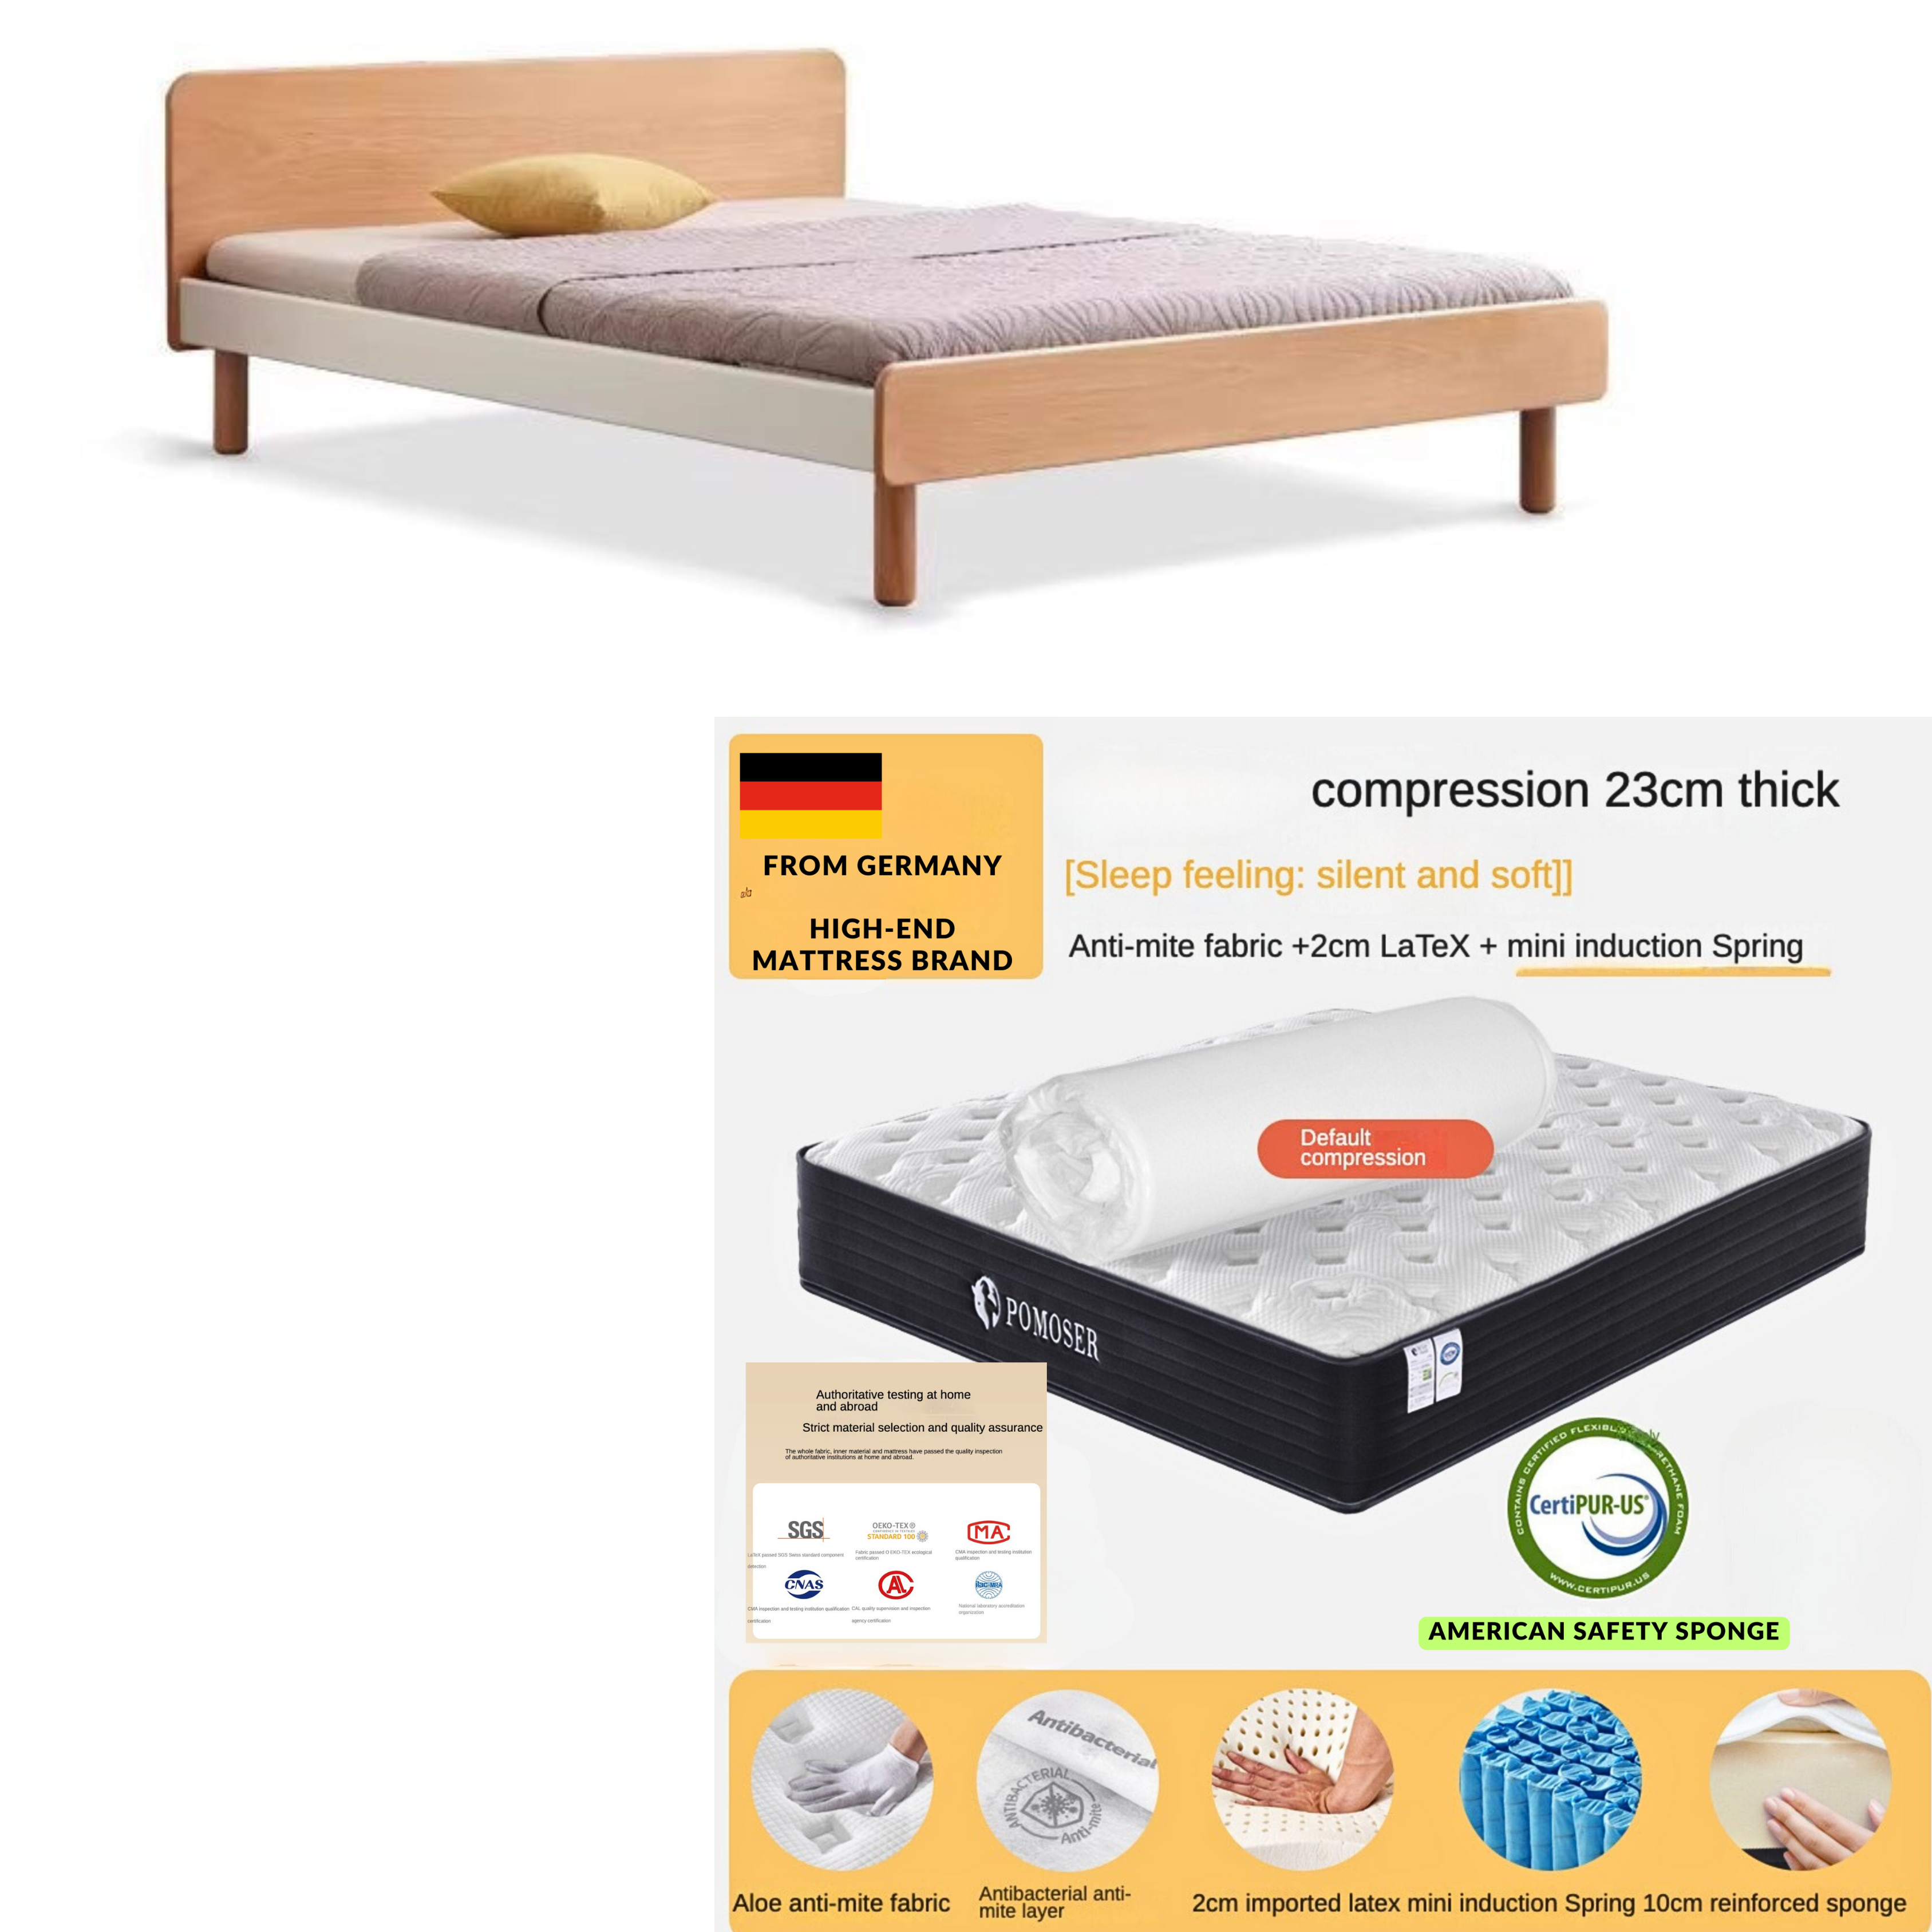 European Beech solid wood Drawer Storage Bed"